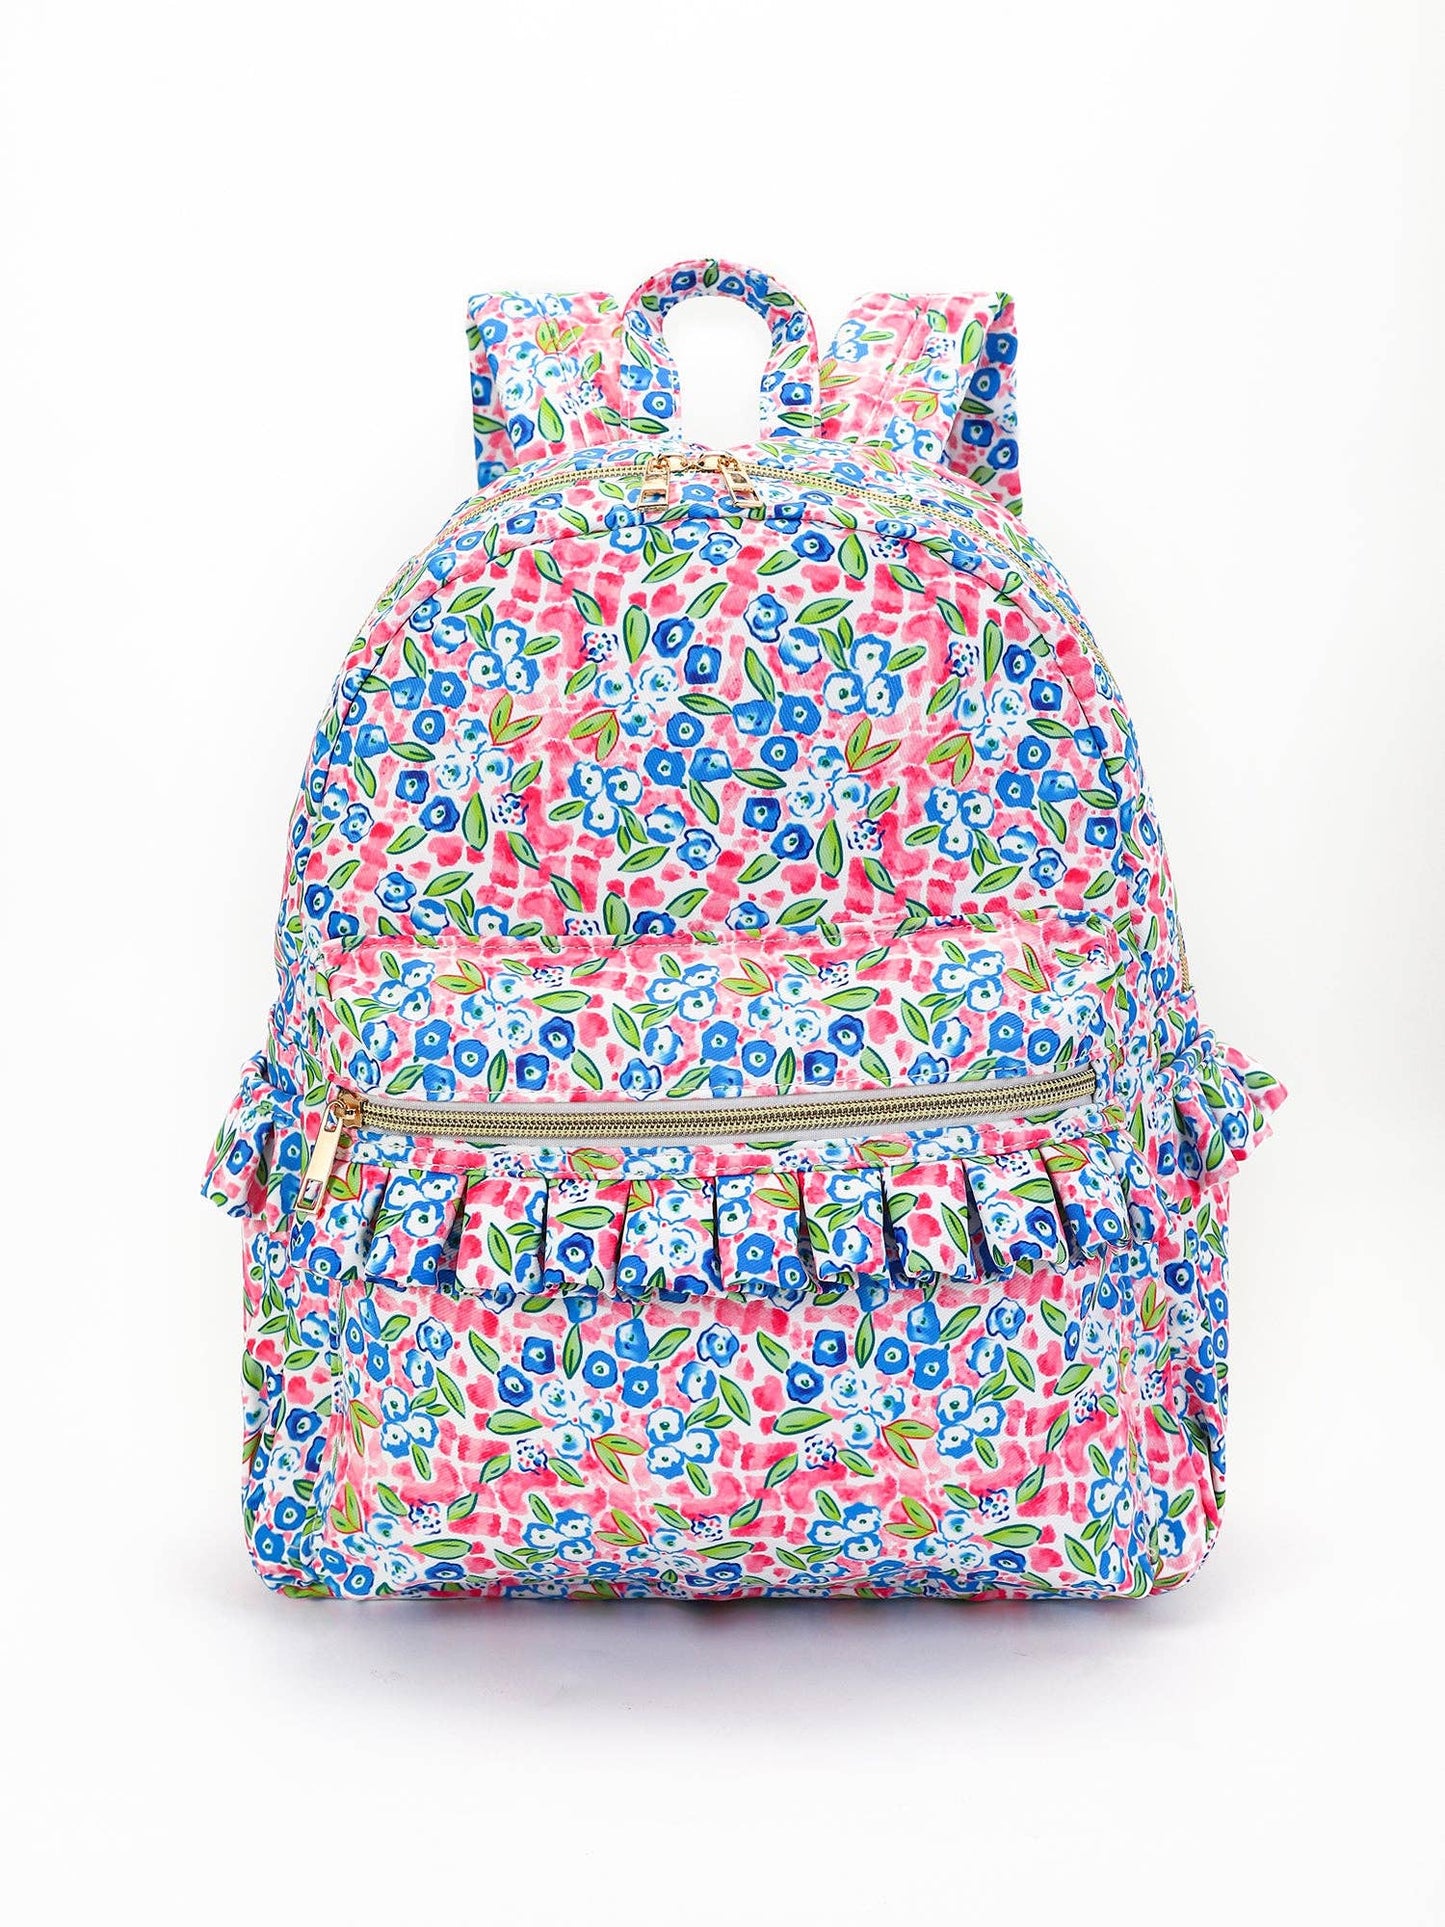 sassy kids palace - Blue Flower Girls Ruffle Backpack